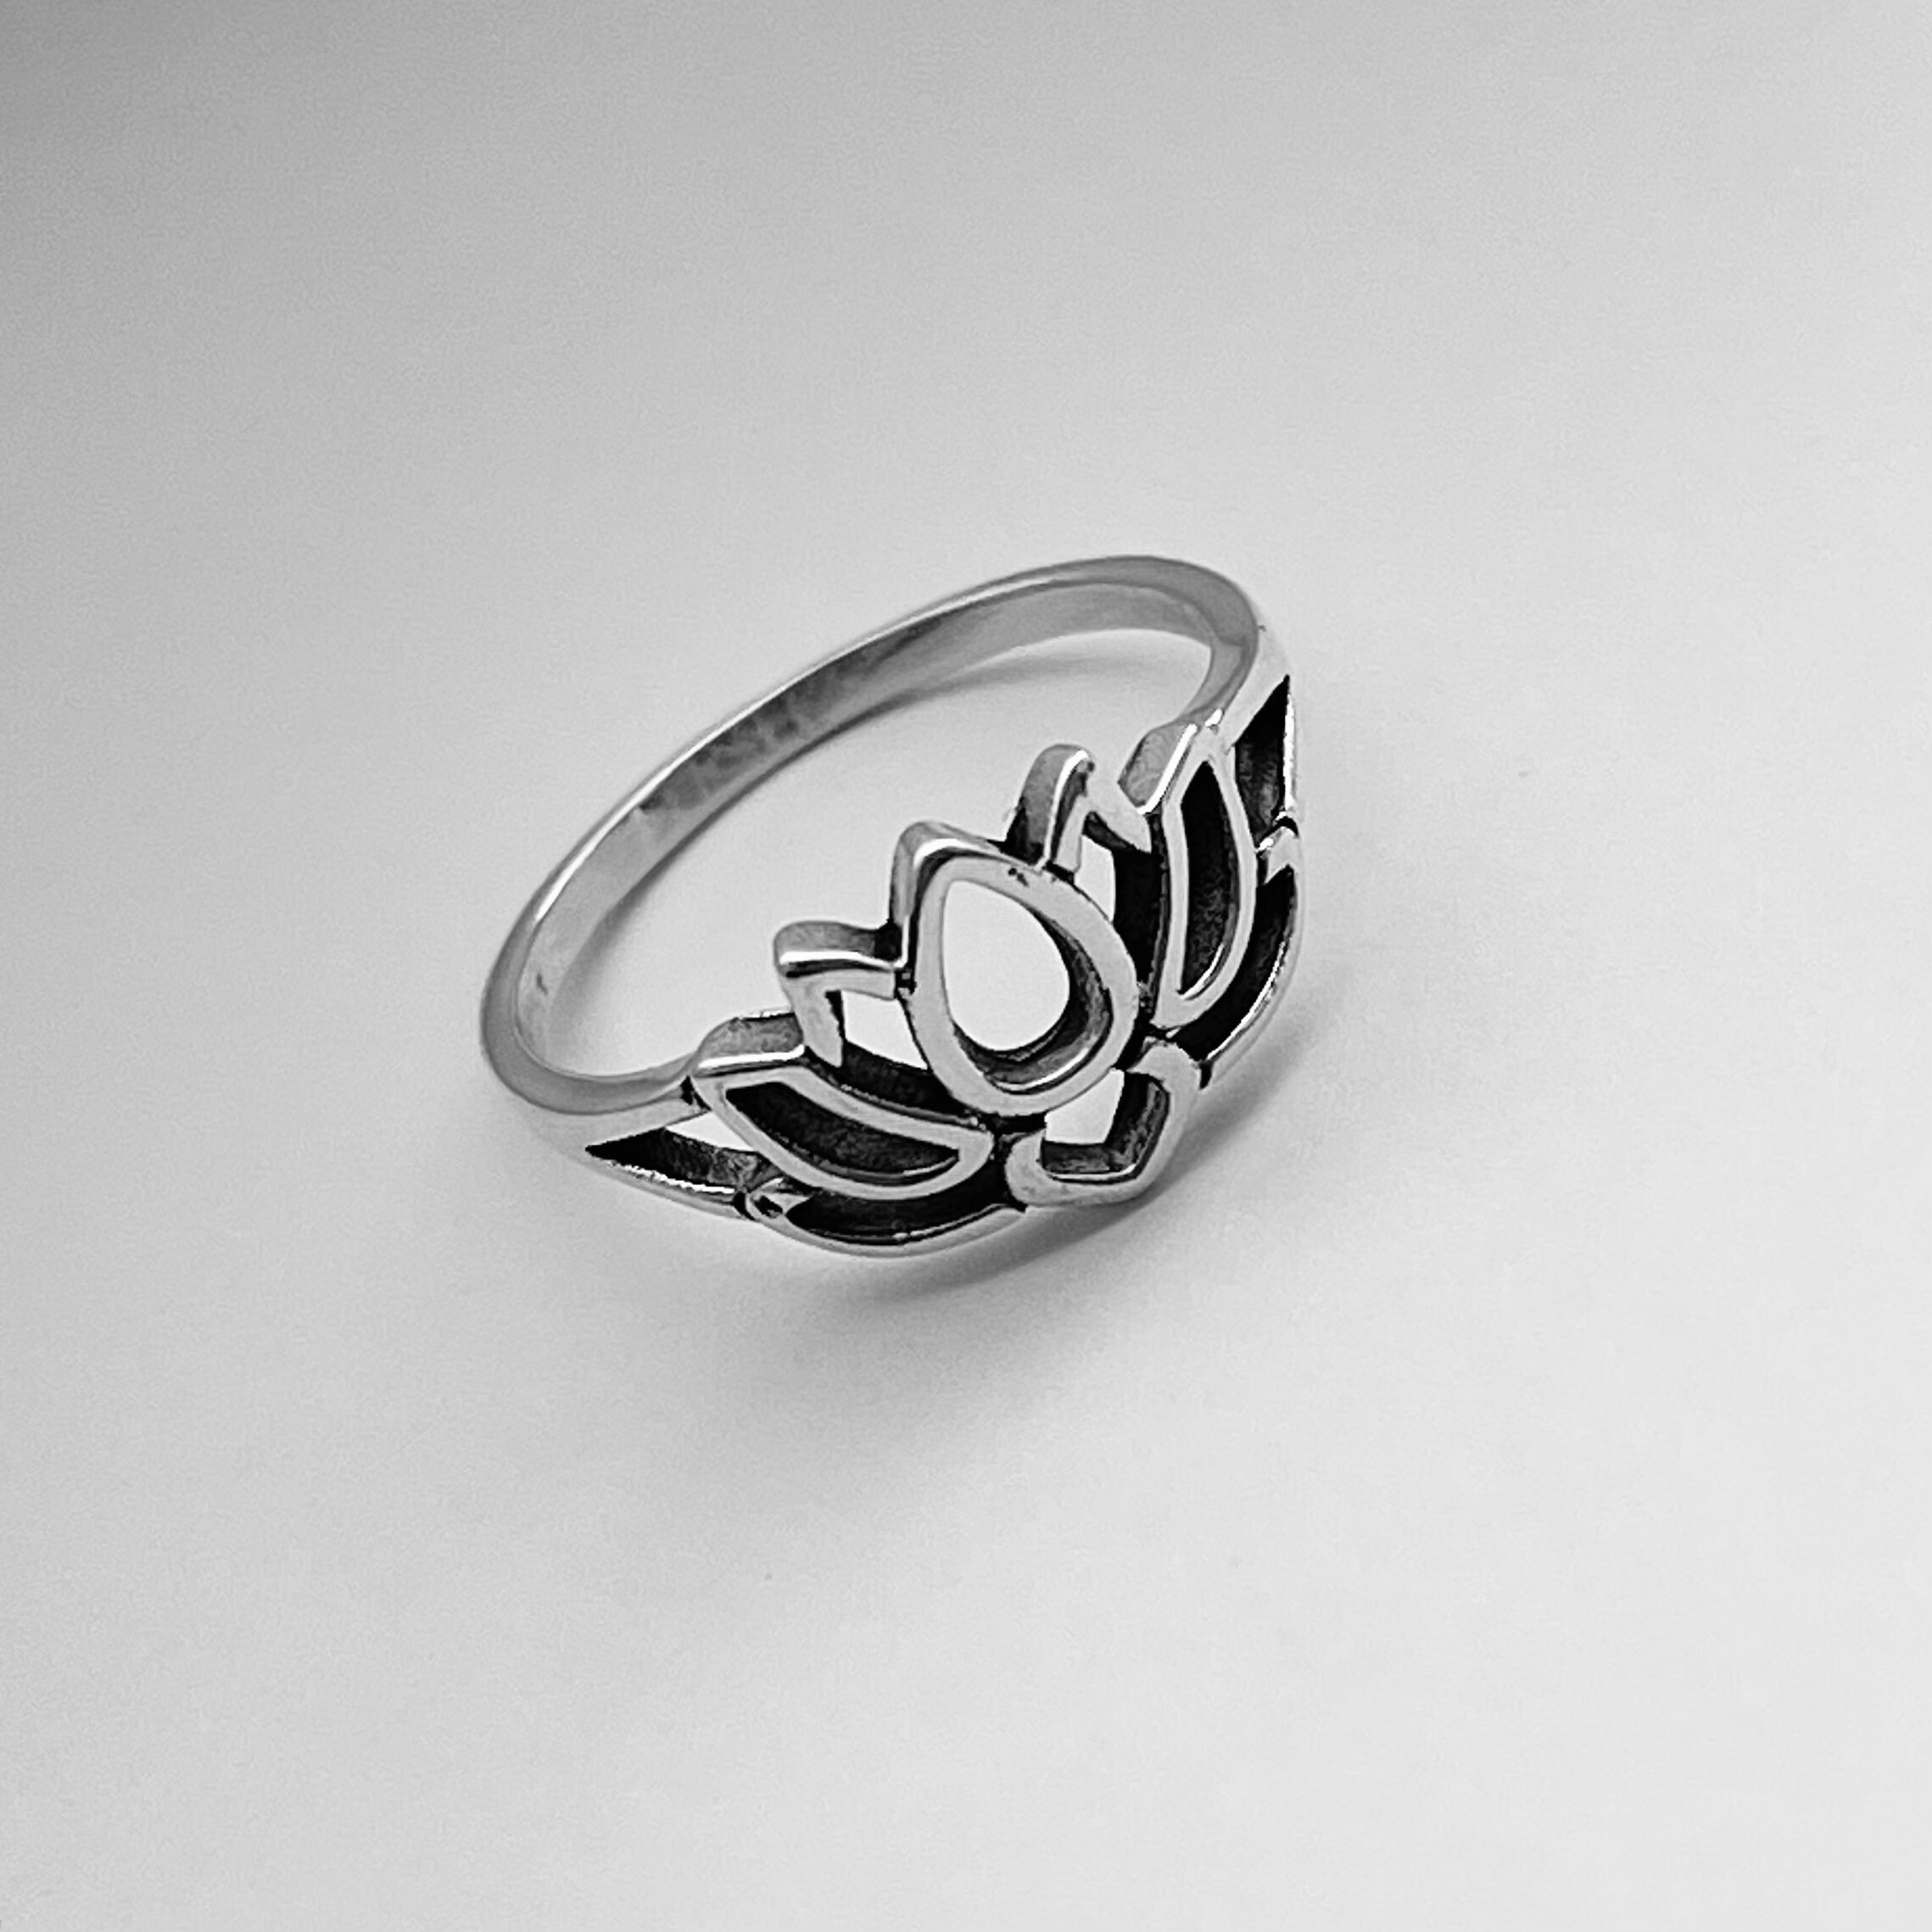 Earth Gems Jewelry Sterling Silver Ring Lotus Design Ring Silver Rings Lotus  Flower Ring for Women - Walmart.com